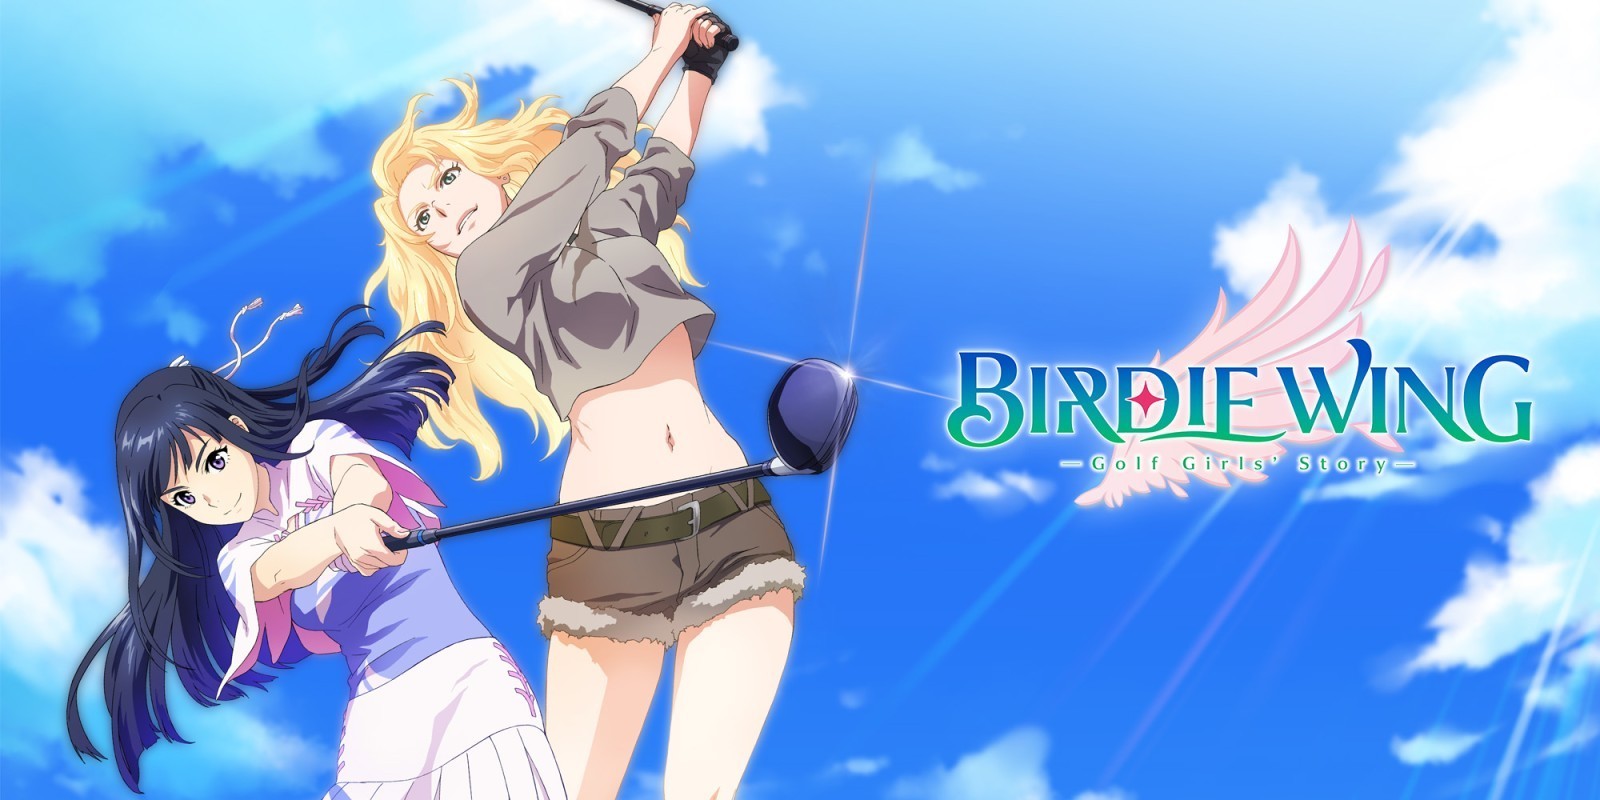 3 - animes-yuri-birdie-wing-golf-girls-story